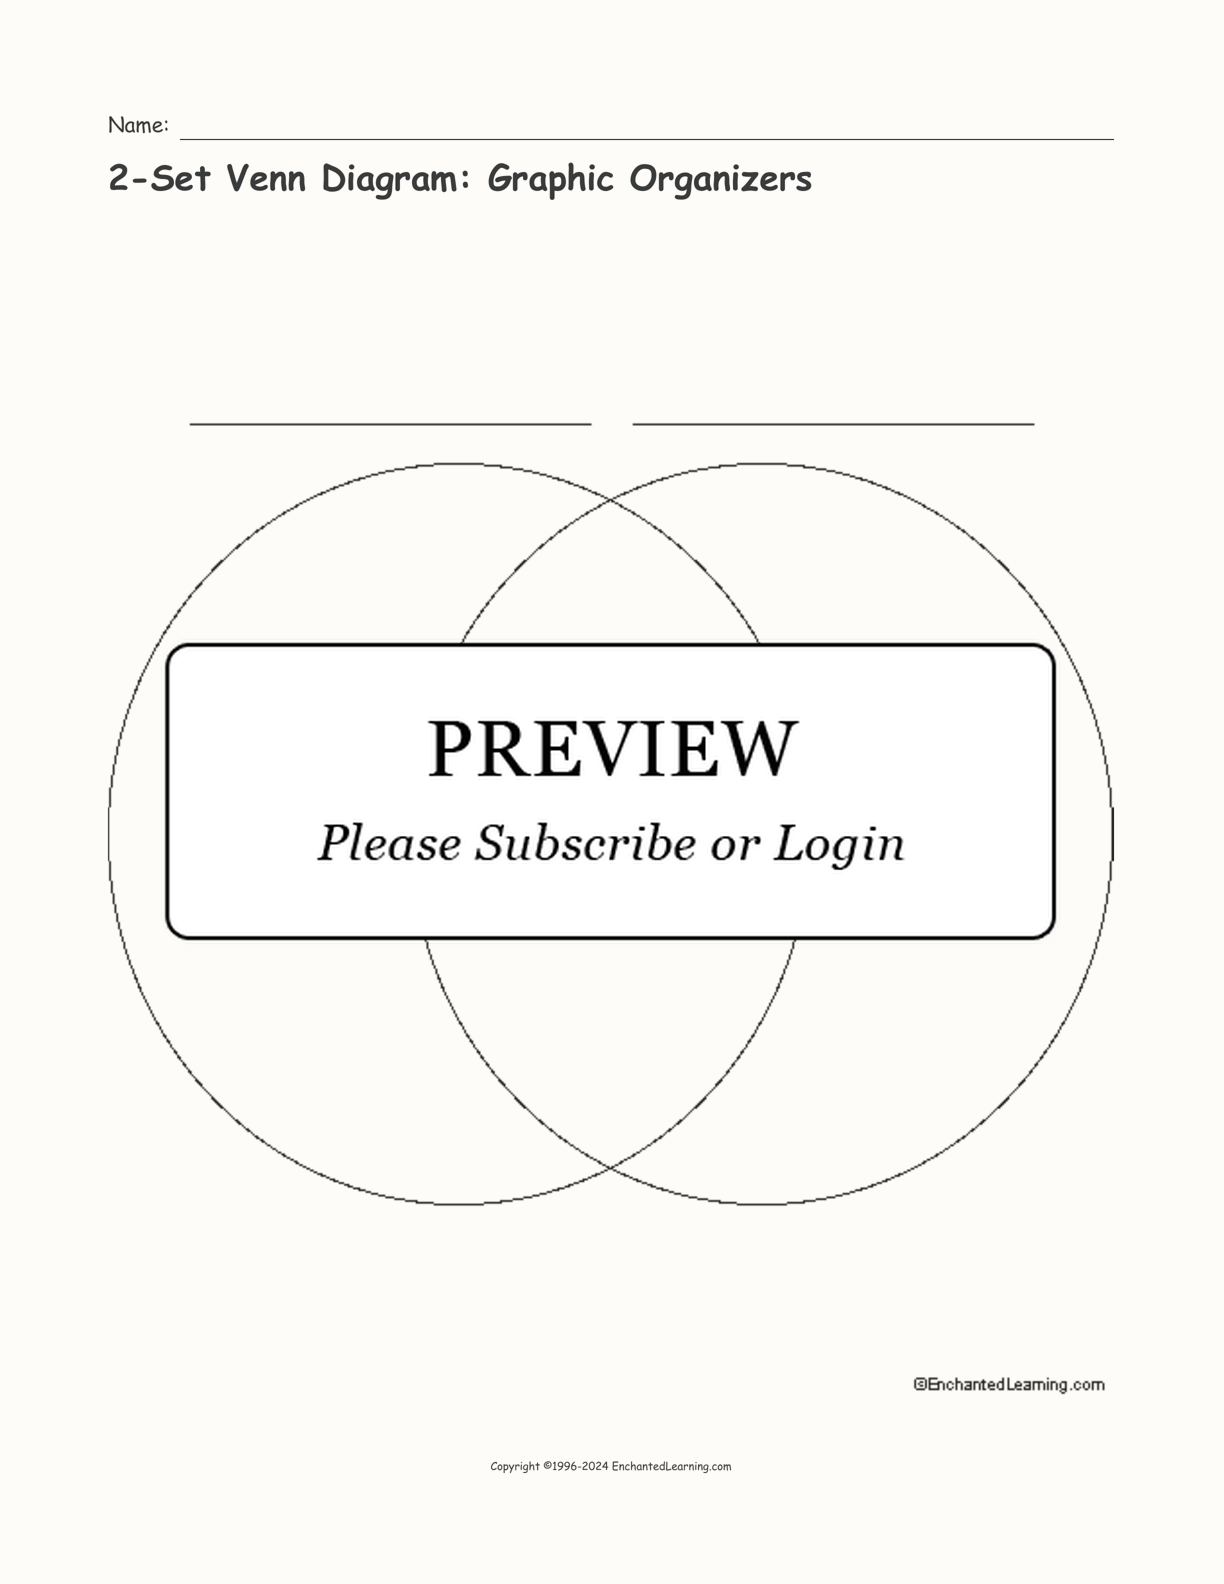 2-Set Venn Diagram: Graphic Organizers interactive printout page 1